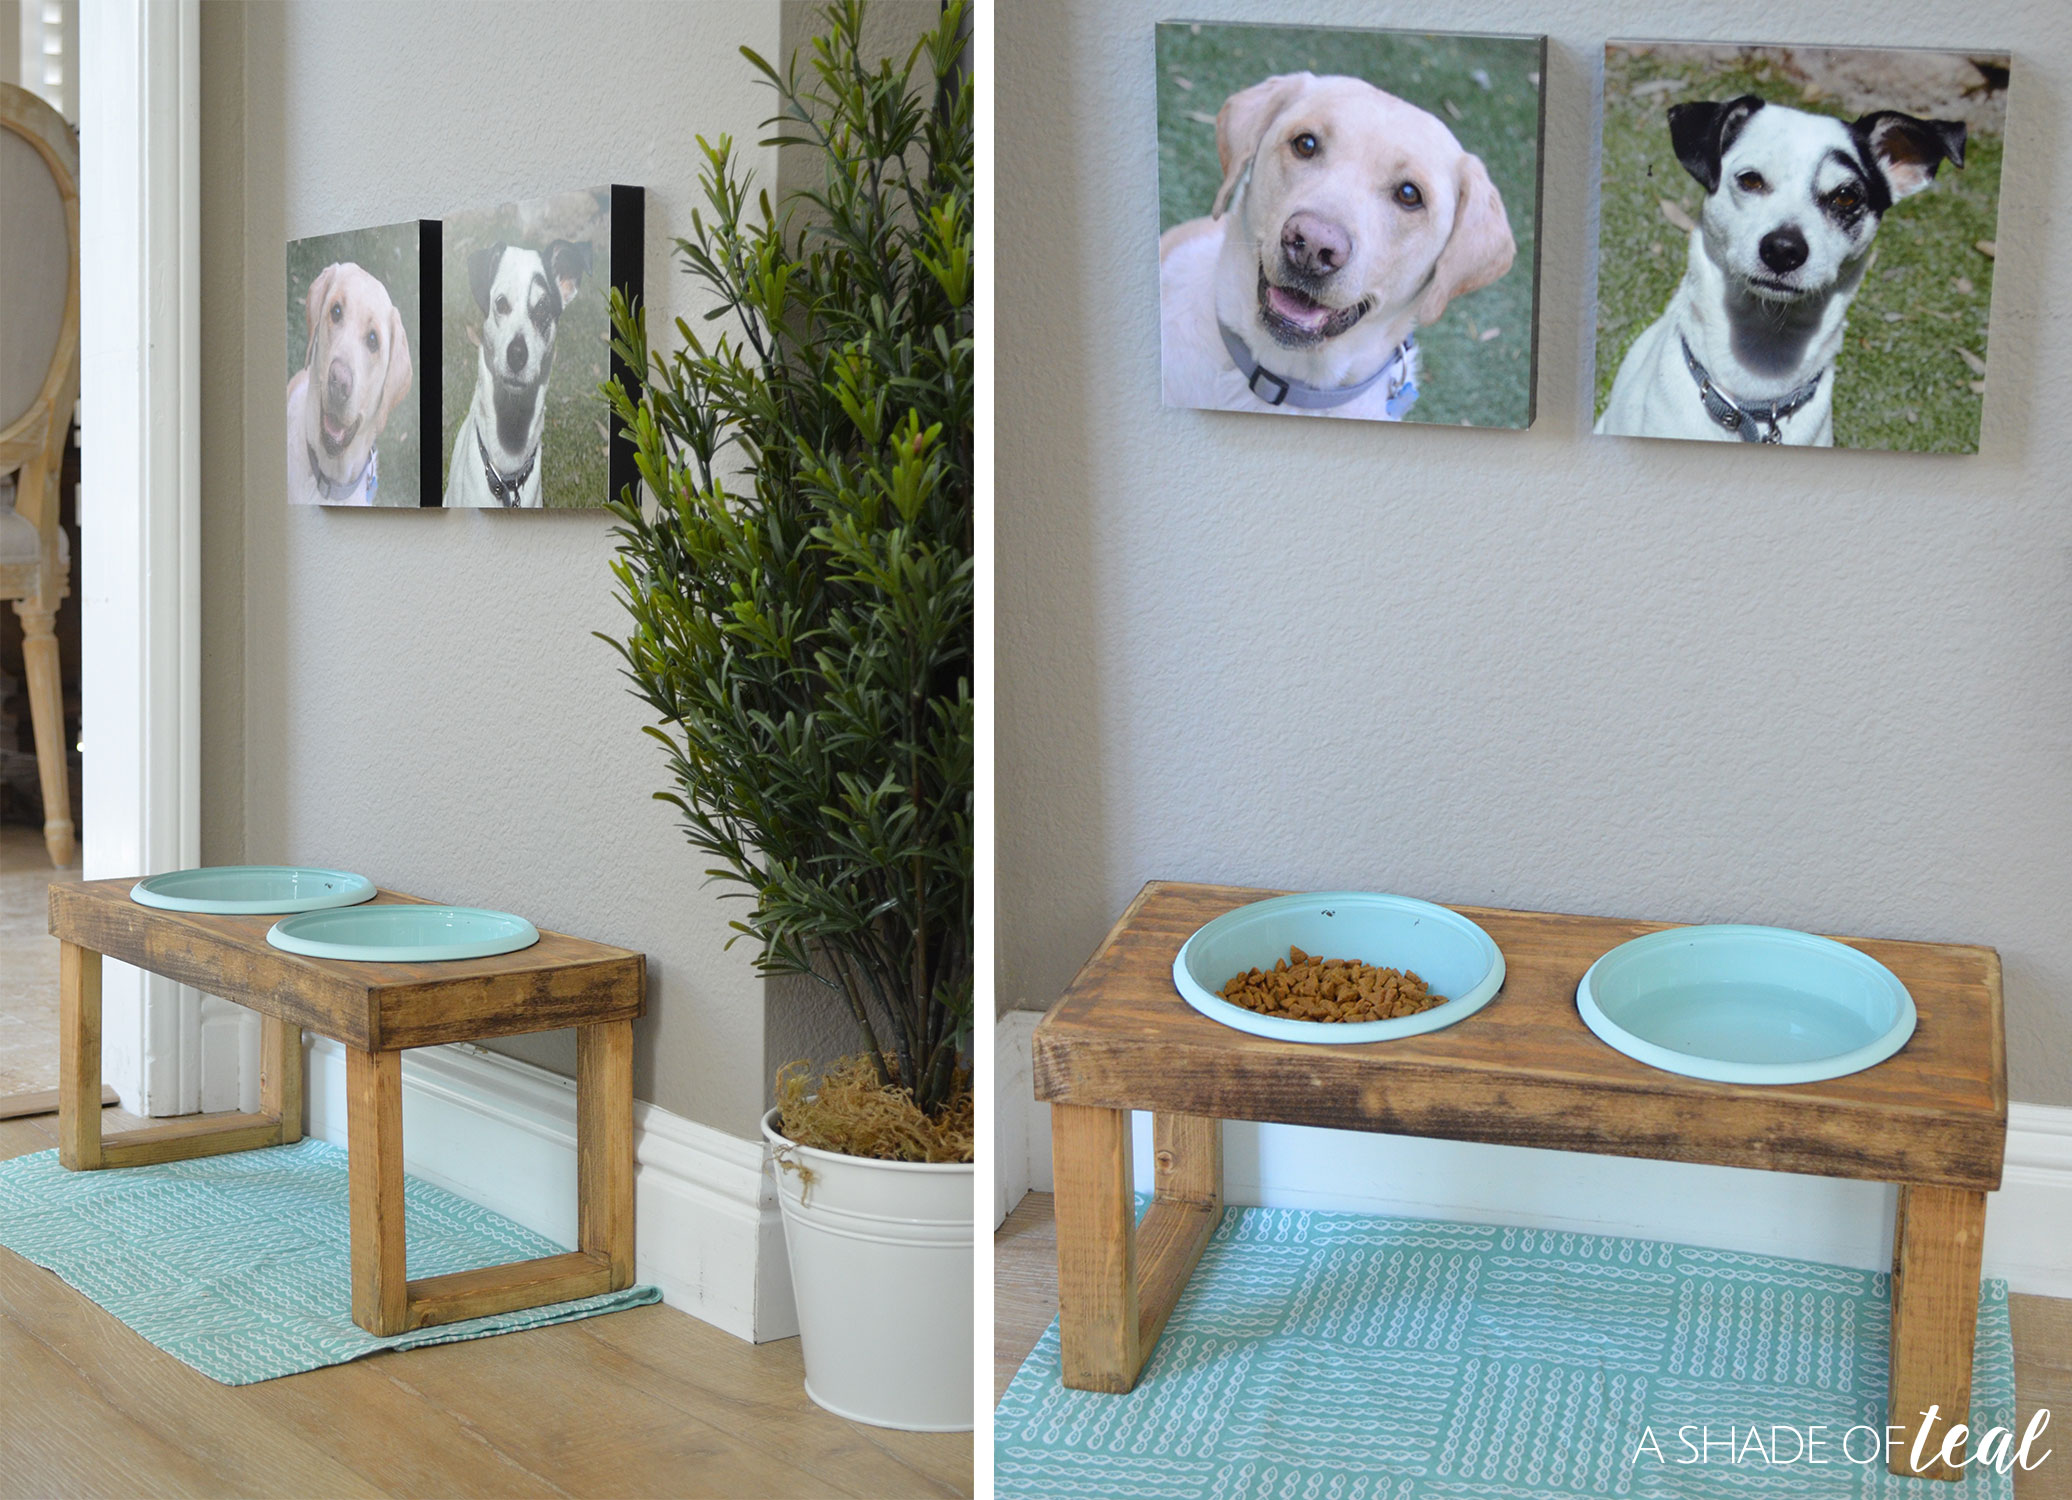 Dog Bowl Stand Elevated Dog Food Stand Raised Dog Feeder Modern